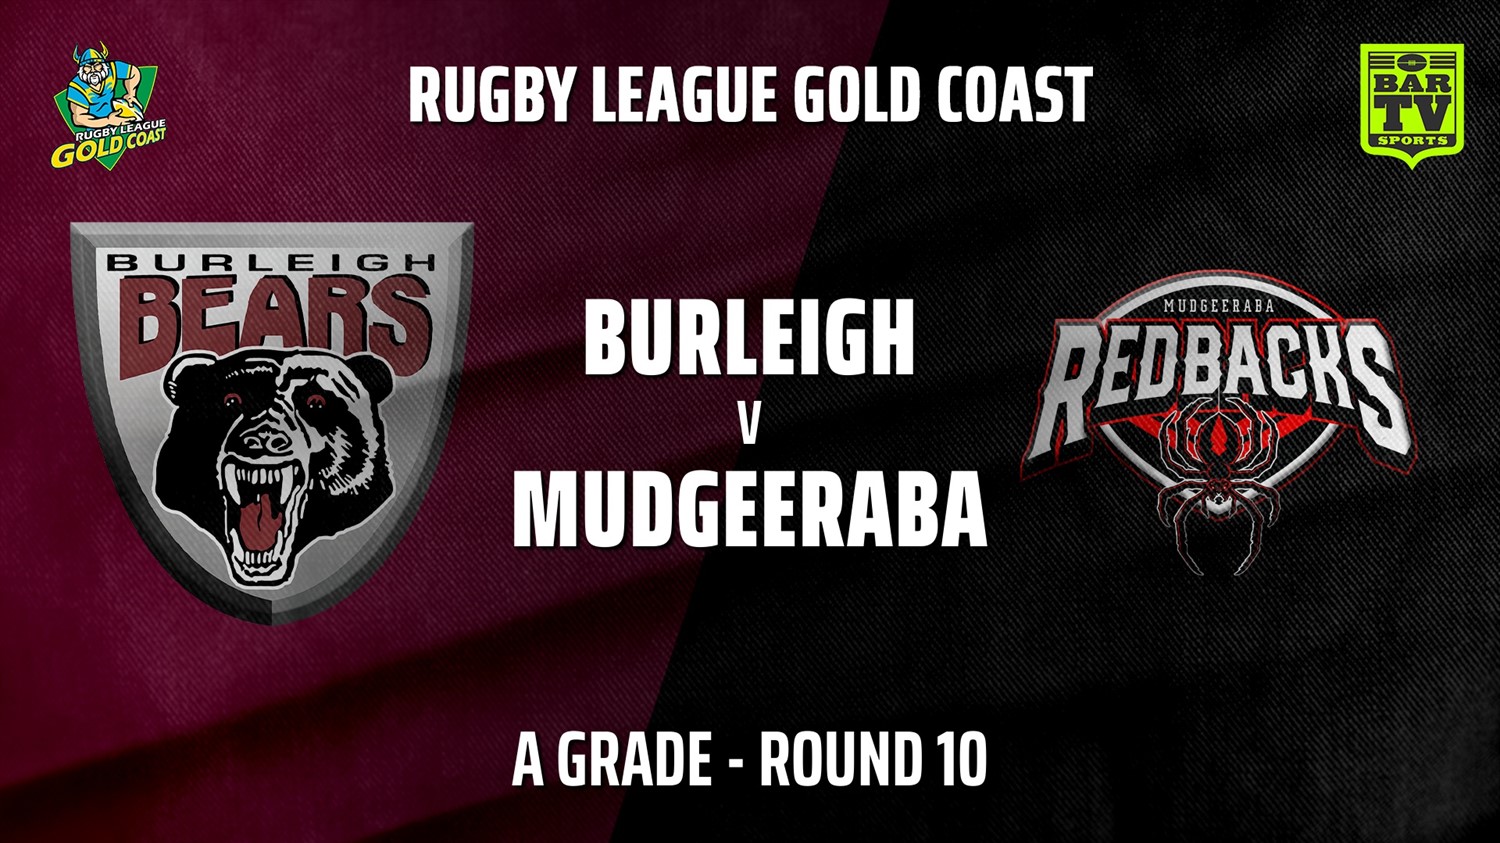 210718-Gold Coast Round 10 - A Grade - Burleigh Bears v Mudgeeraba Redbacks Minigame Slate Image